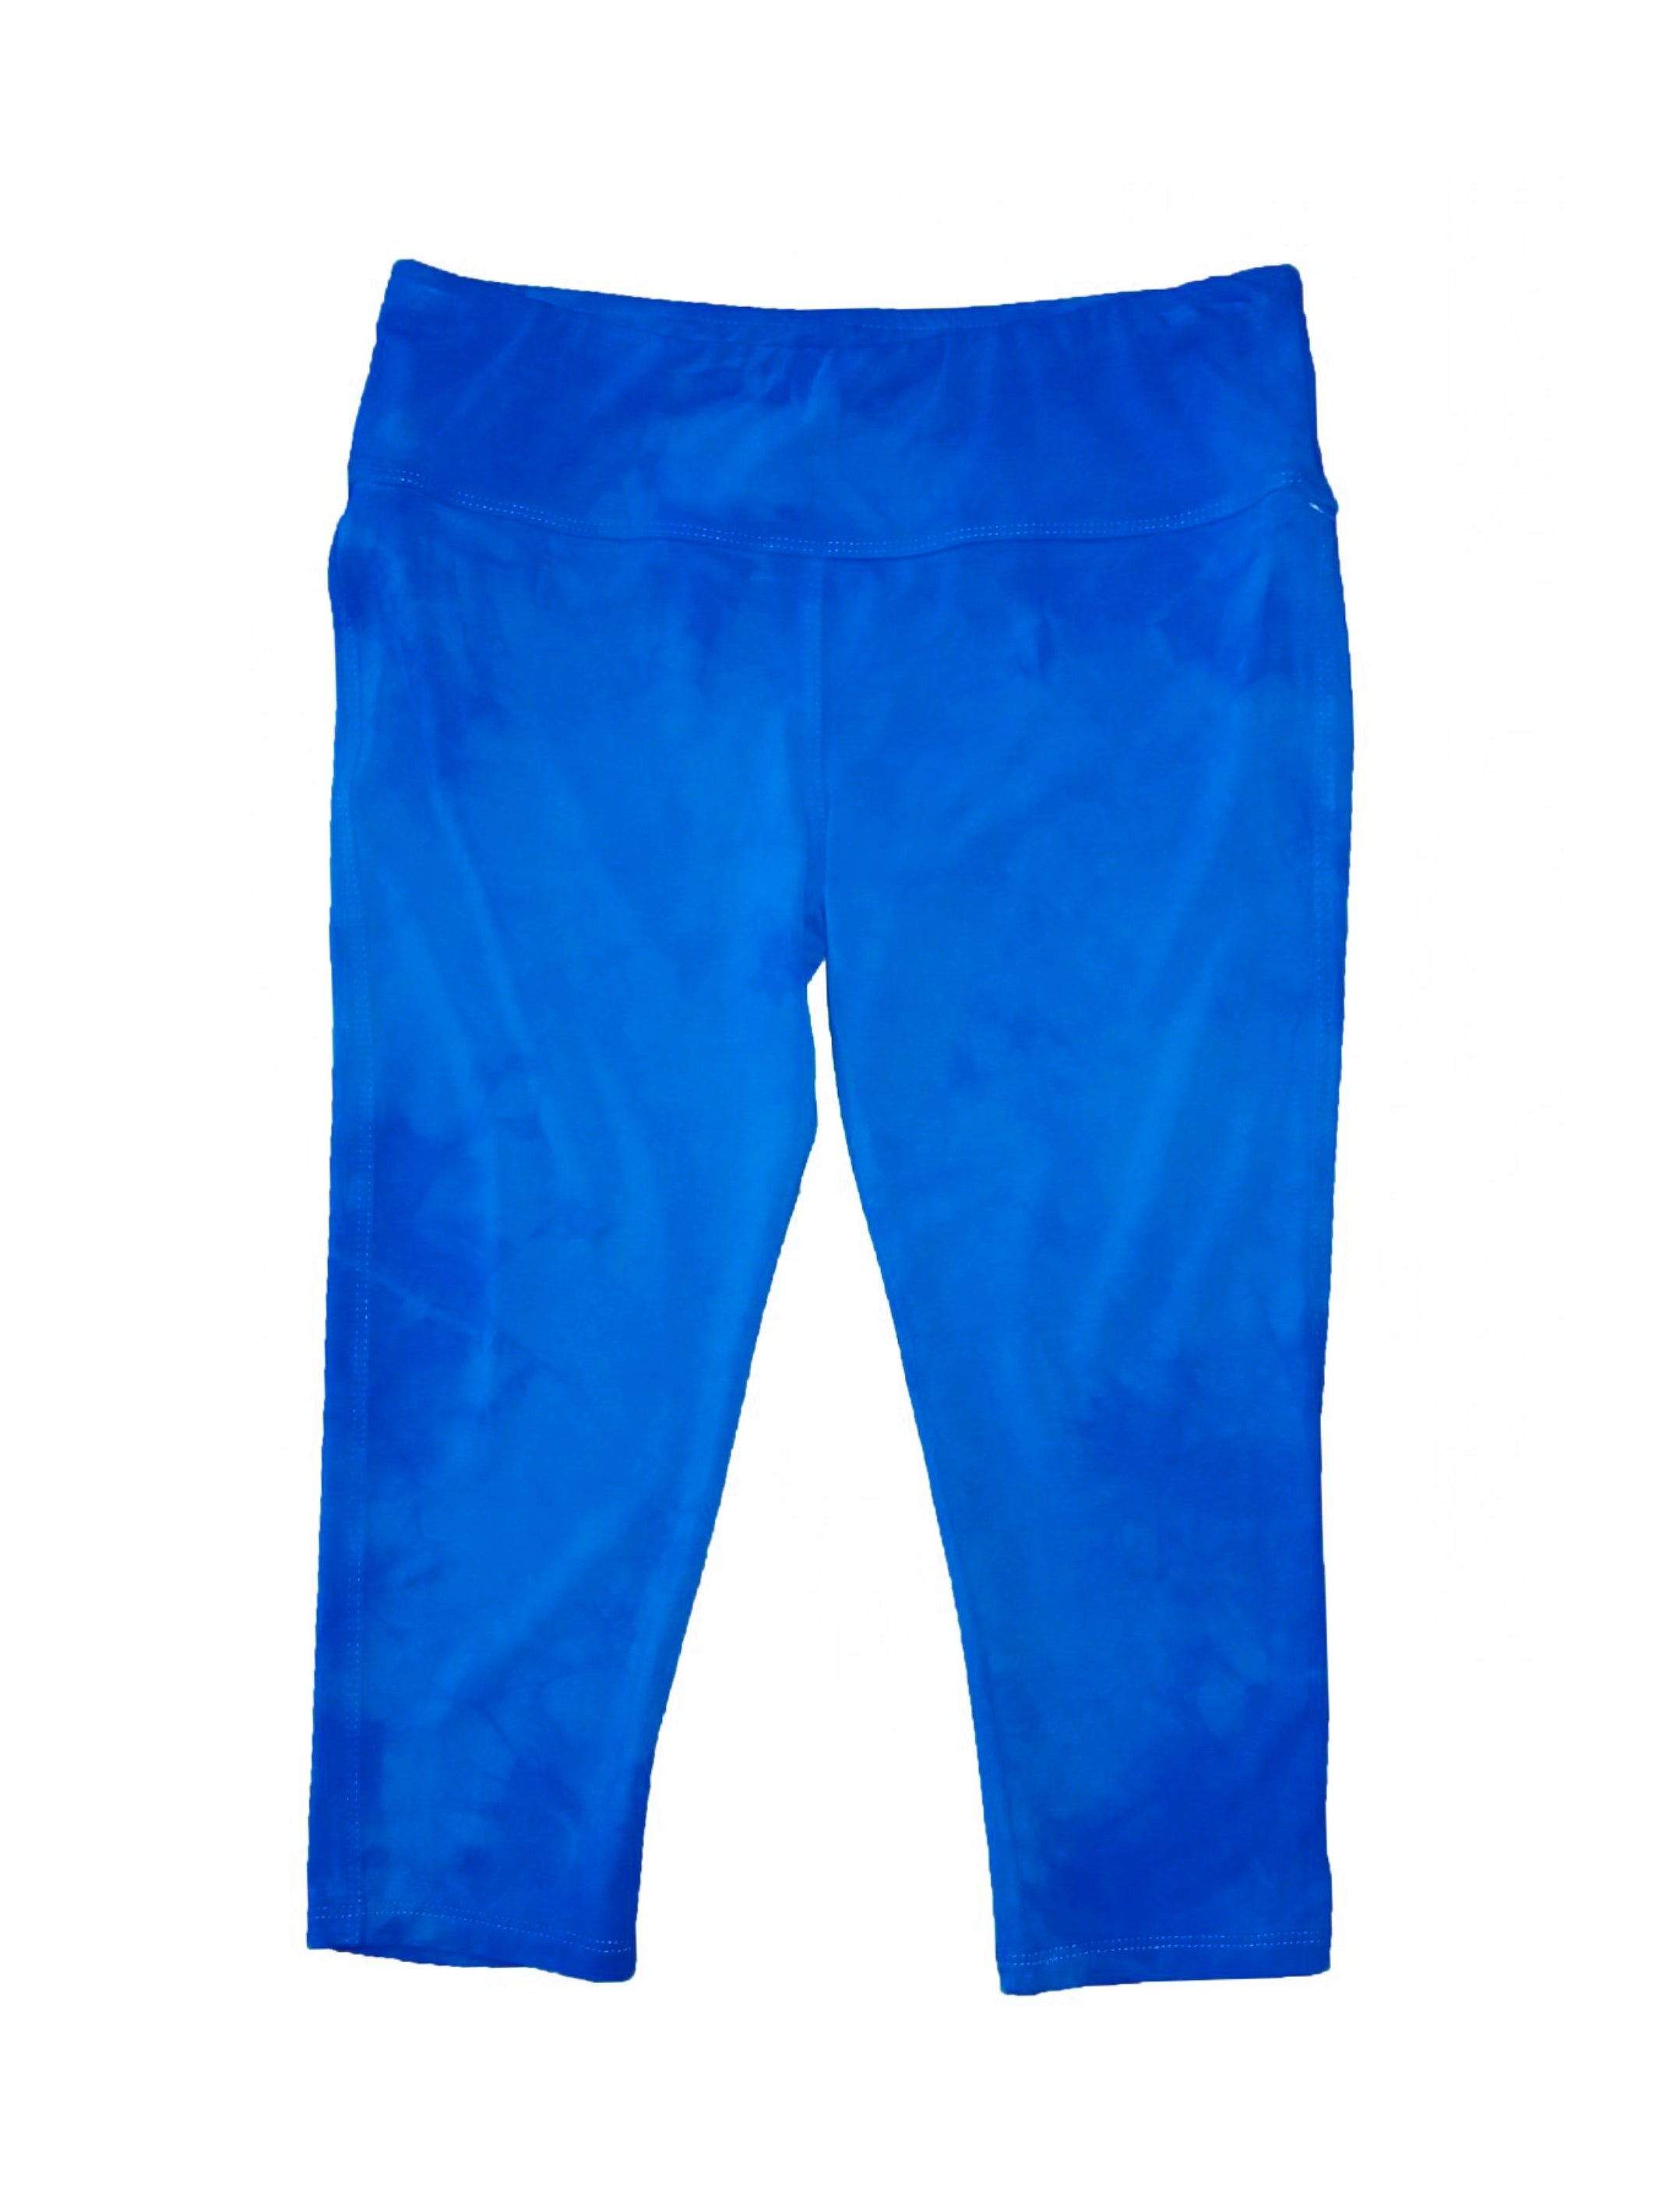 Capri Leggings - Blue Tie Dye